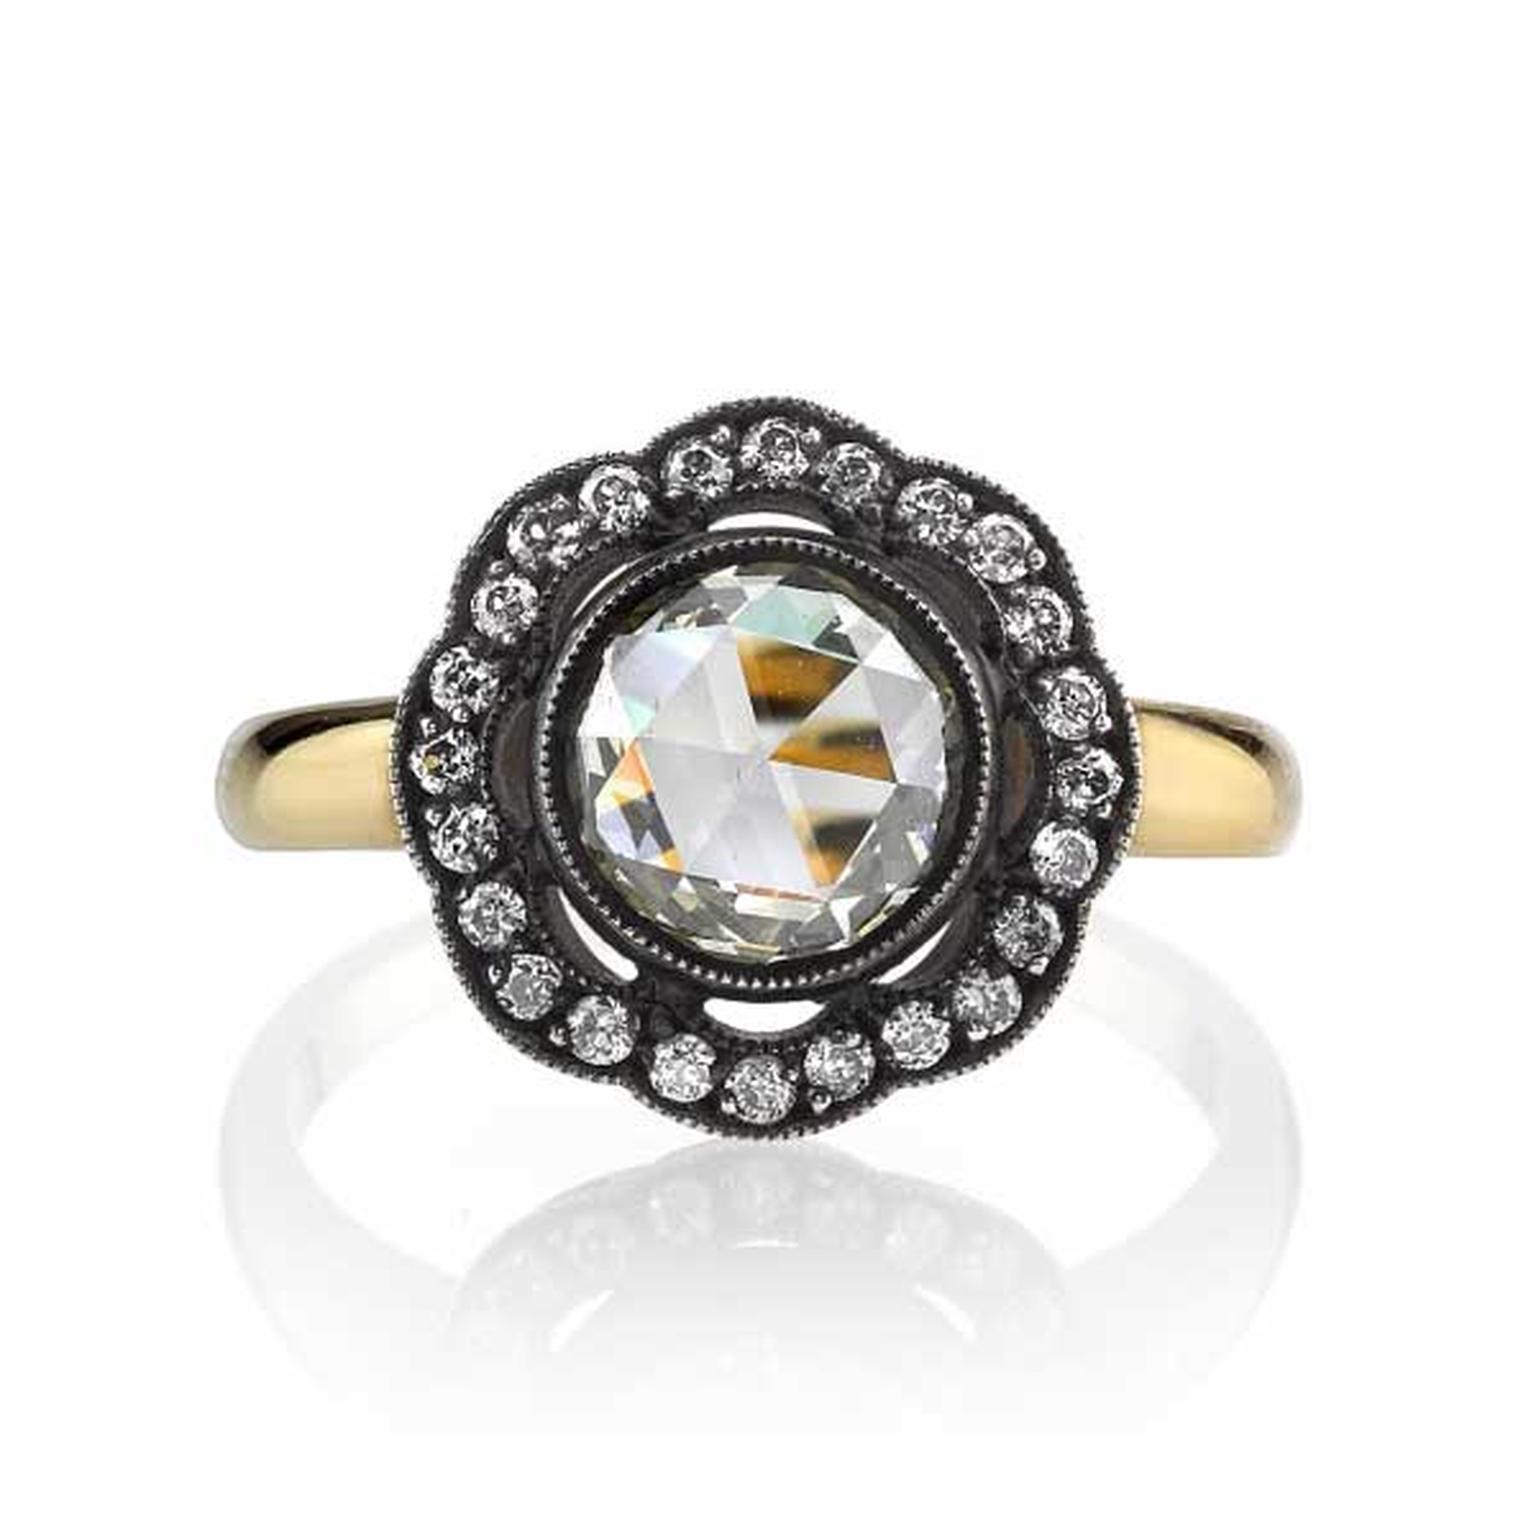 The revival of rose-cut diamond engagement rings